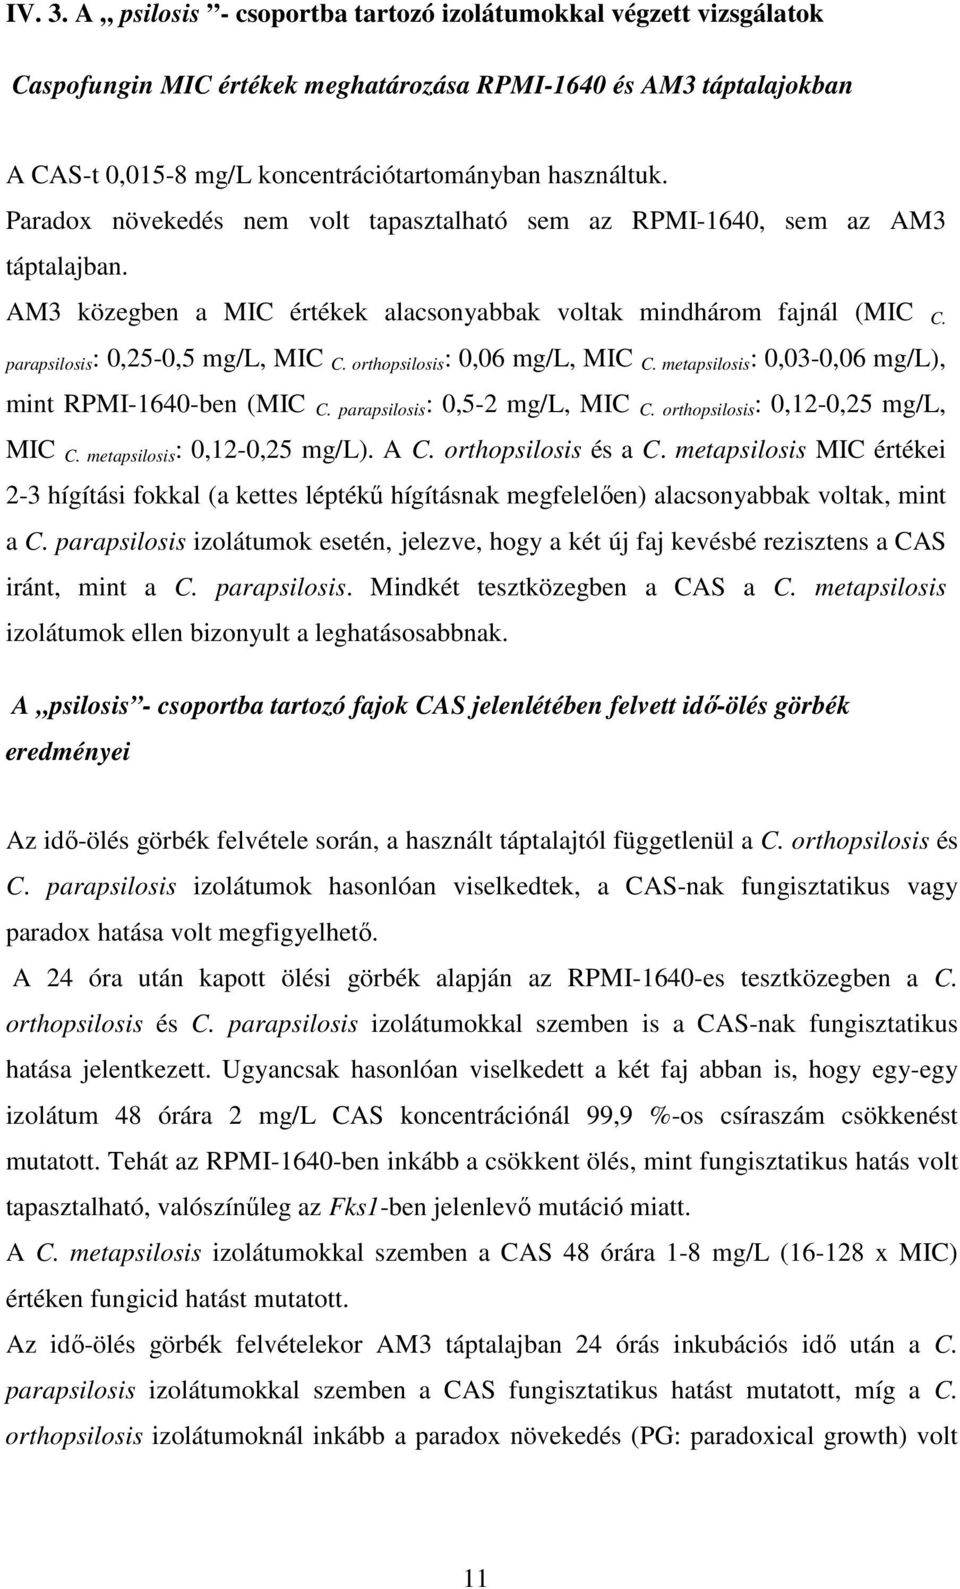 orthopsilosis : 0,06 mg/l, MIC C. metapsilosis : 0,03-0,06 mg/l), mint RPMI-1640-ben (MIC C. parapsilosis : 0,5-2 mg/l, MIC C. orthopsilosis : 0,12-0,25 mg/l, MIC C. metapsilosis : 0,12-0,25 mg/l).